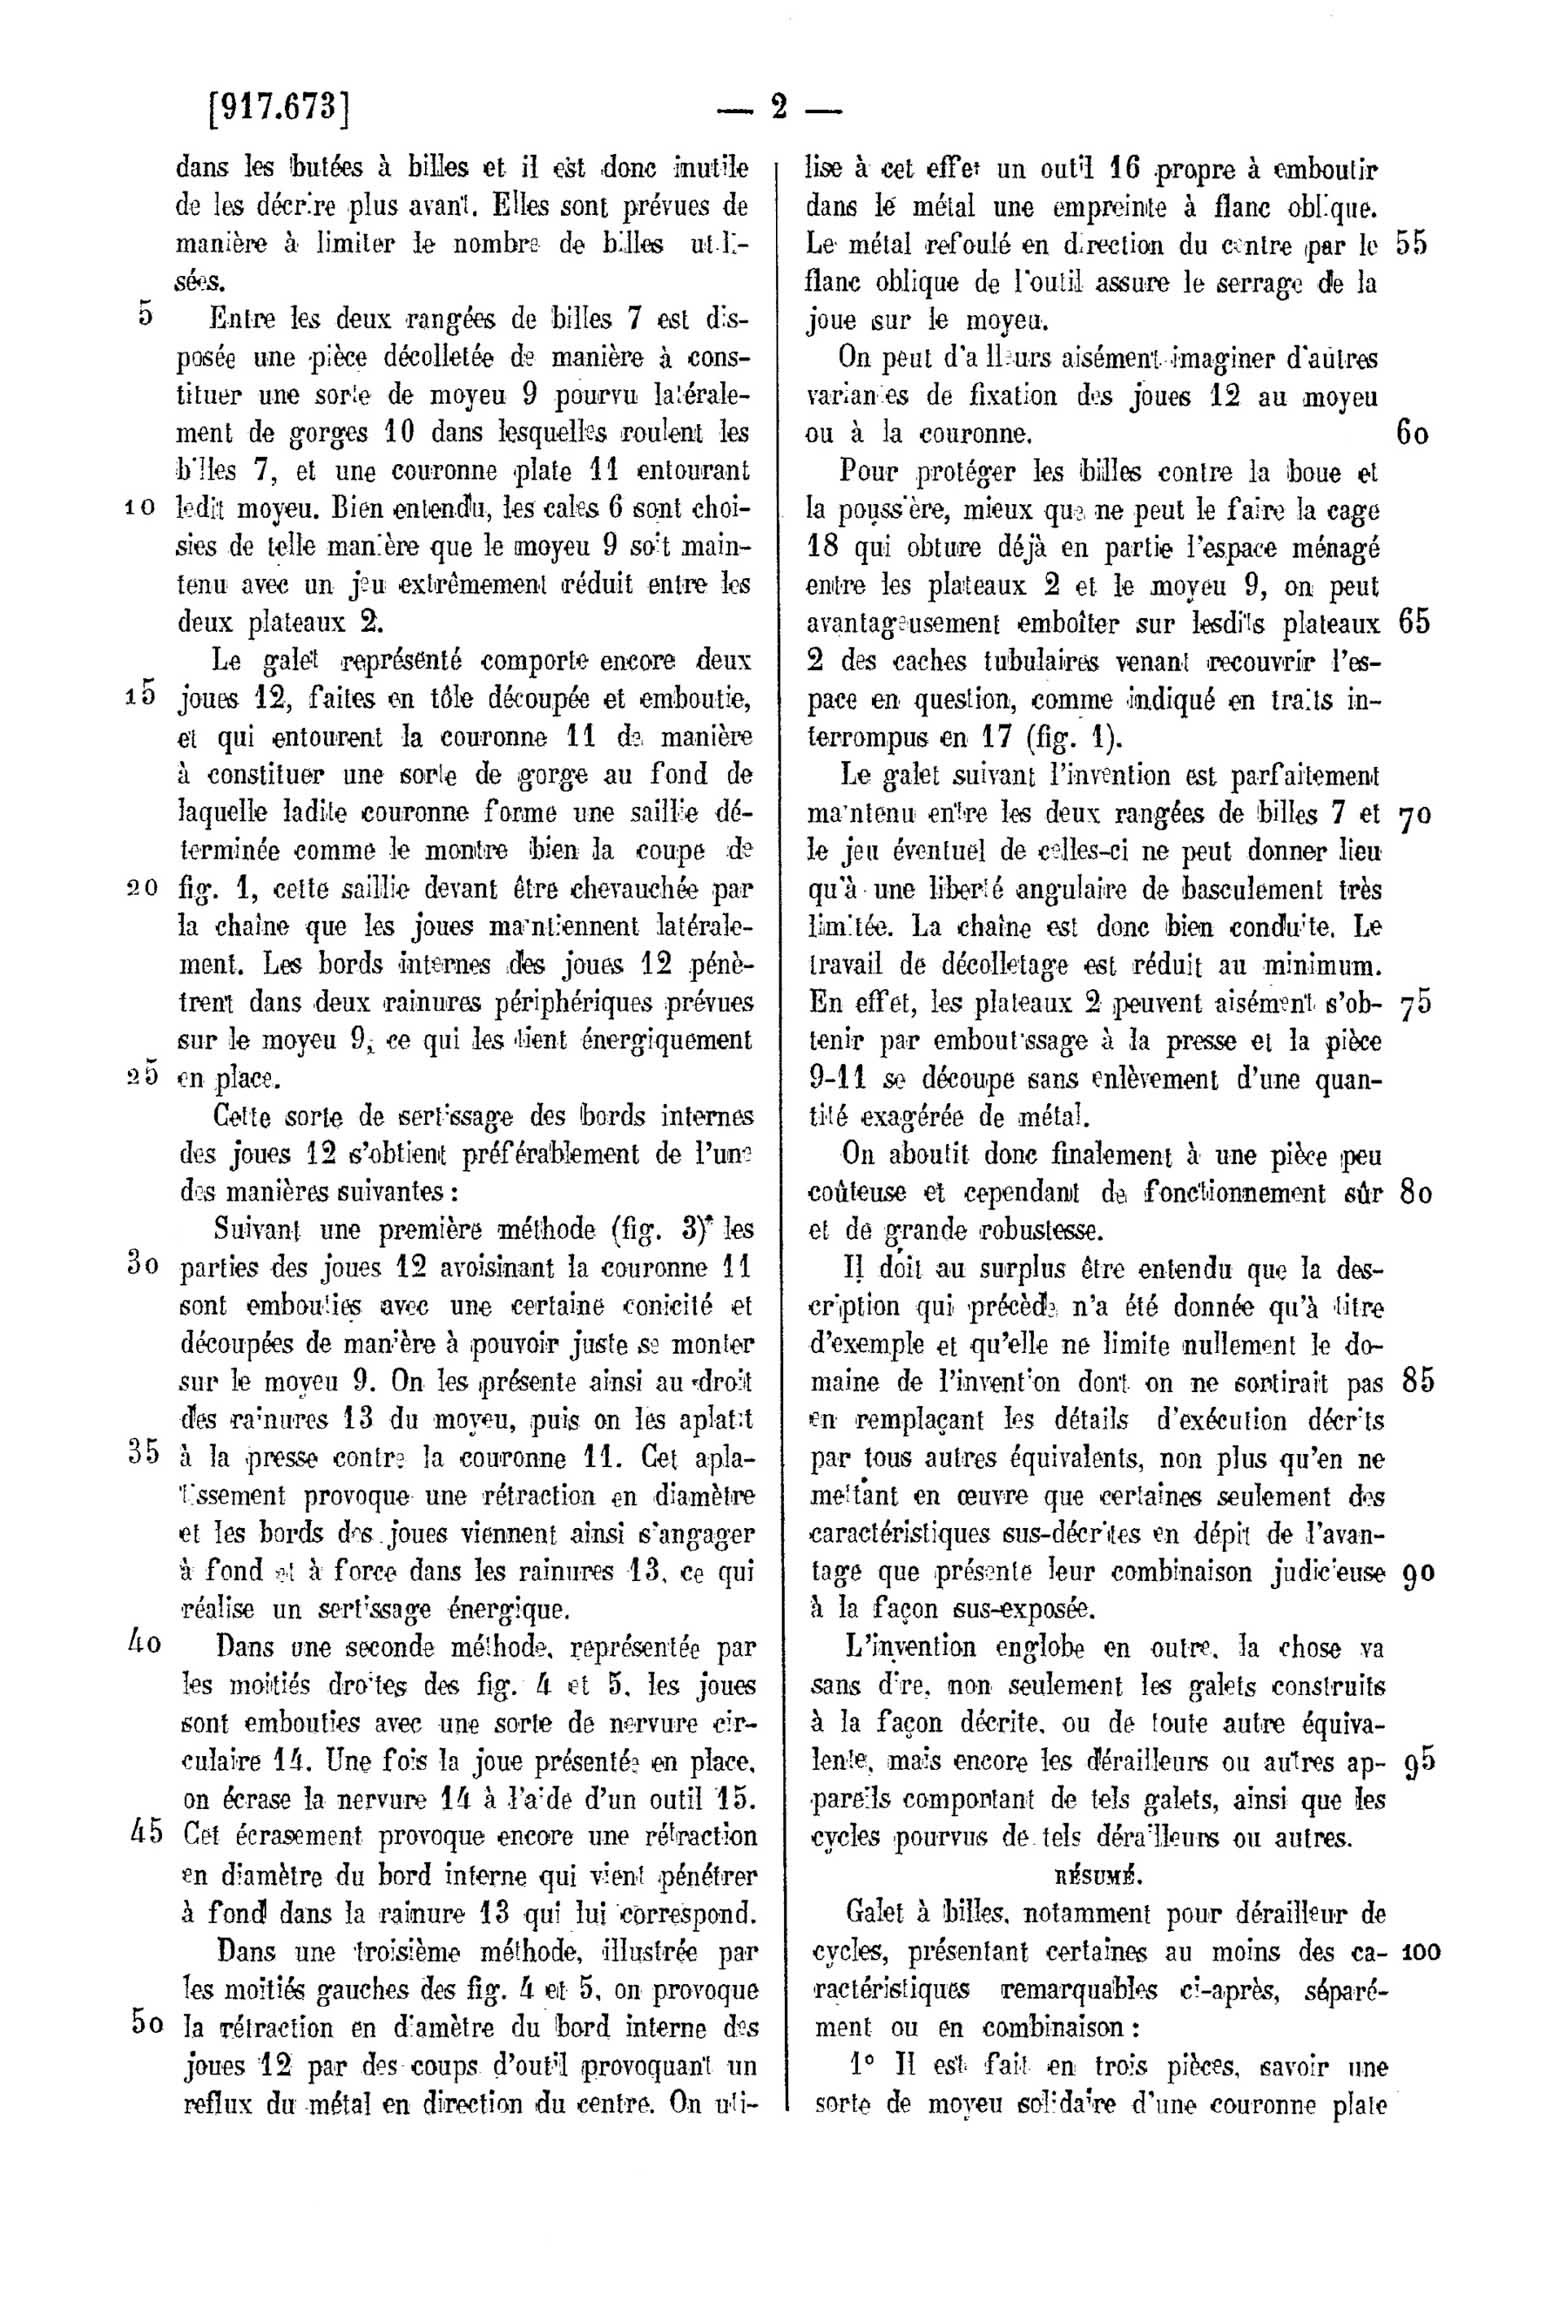 French Patent 917,673 - CMP Samson scan 2 main image